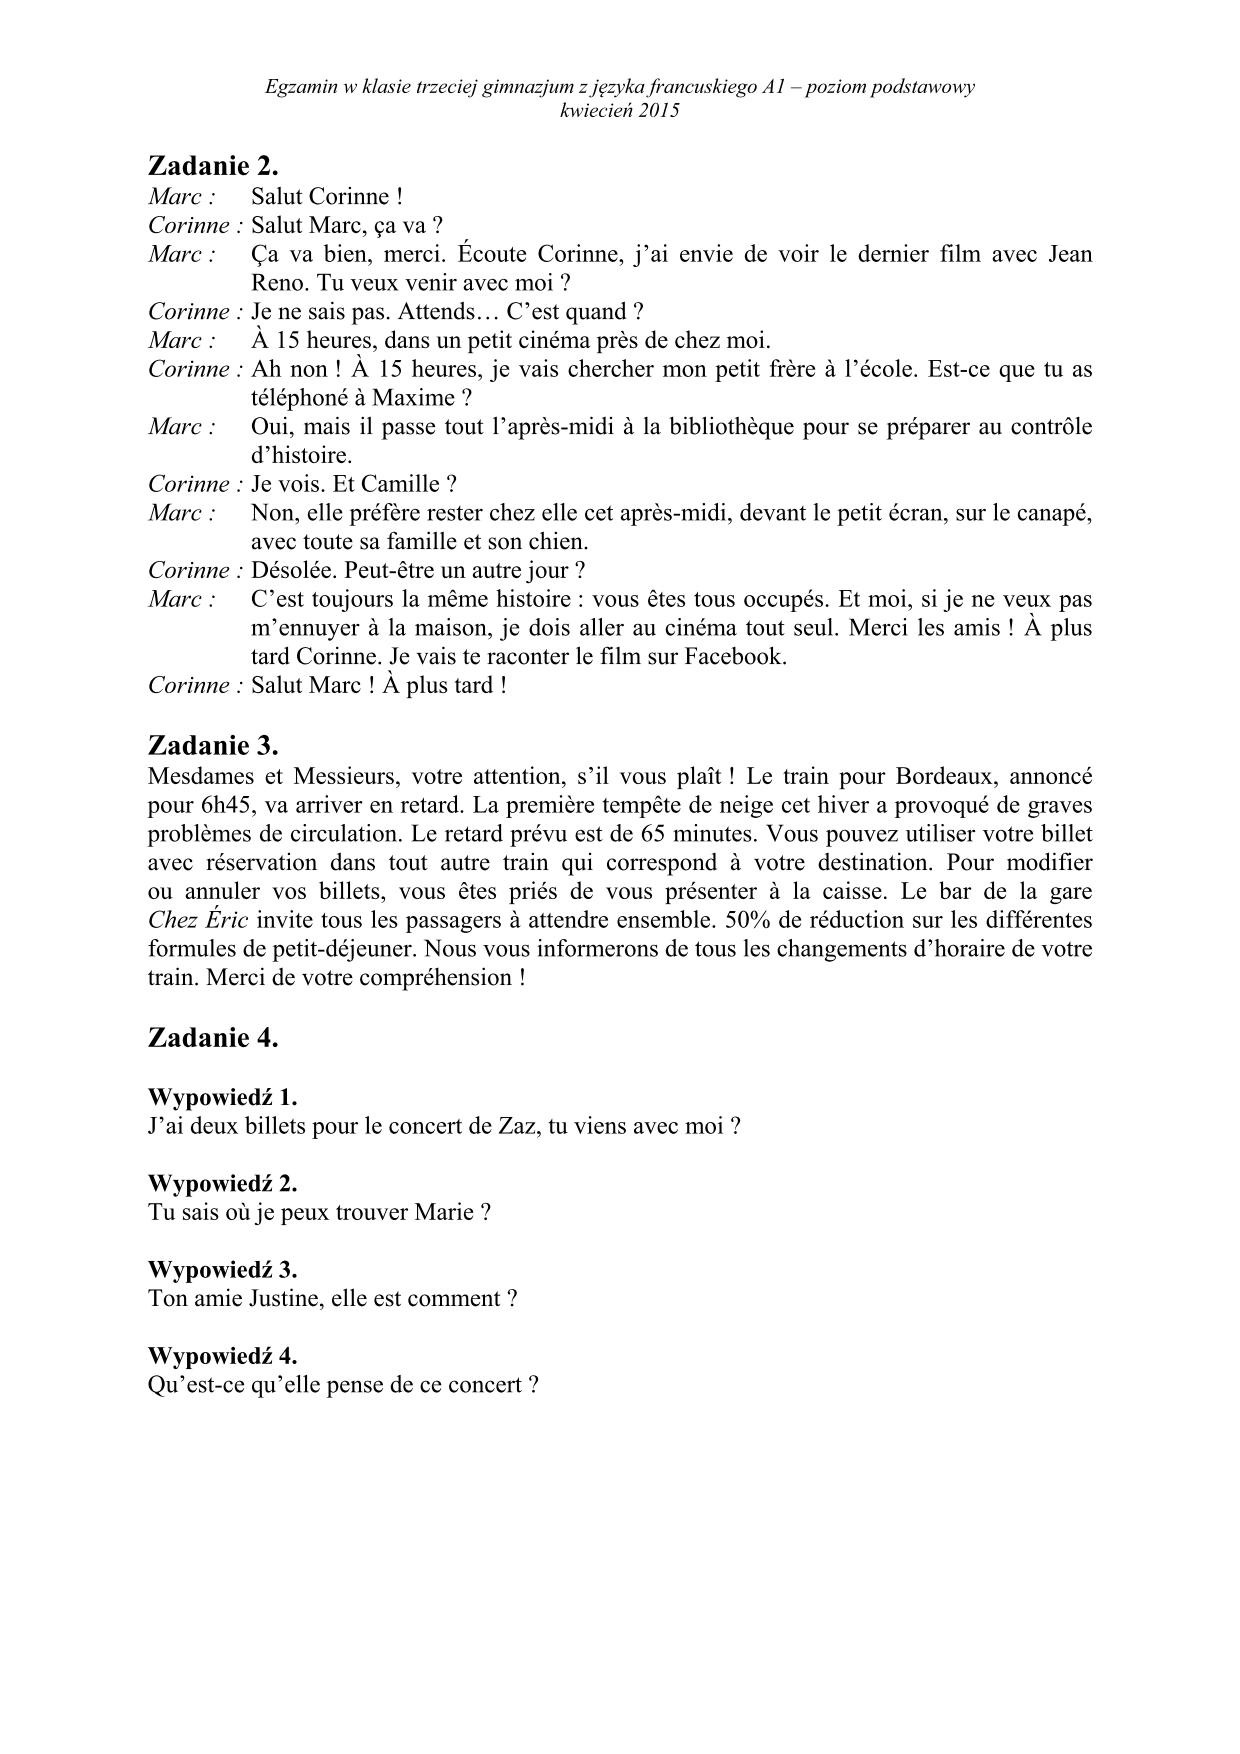 transkrypcja-francuski-poziom-podstawowy-egzamin-gimnazjalny-2015-2